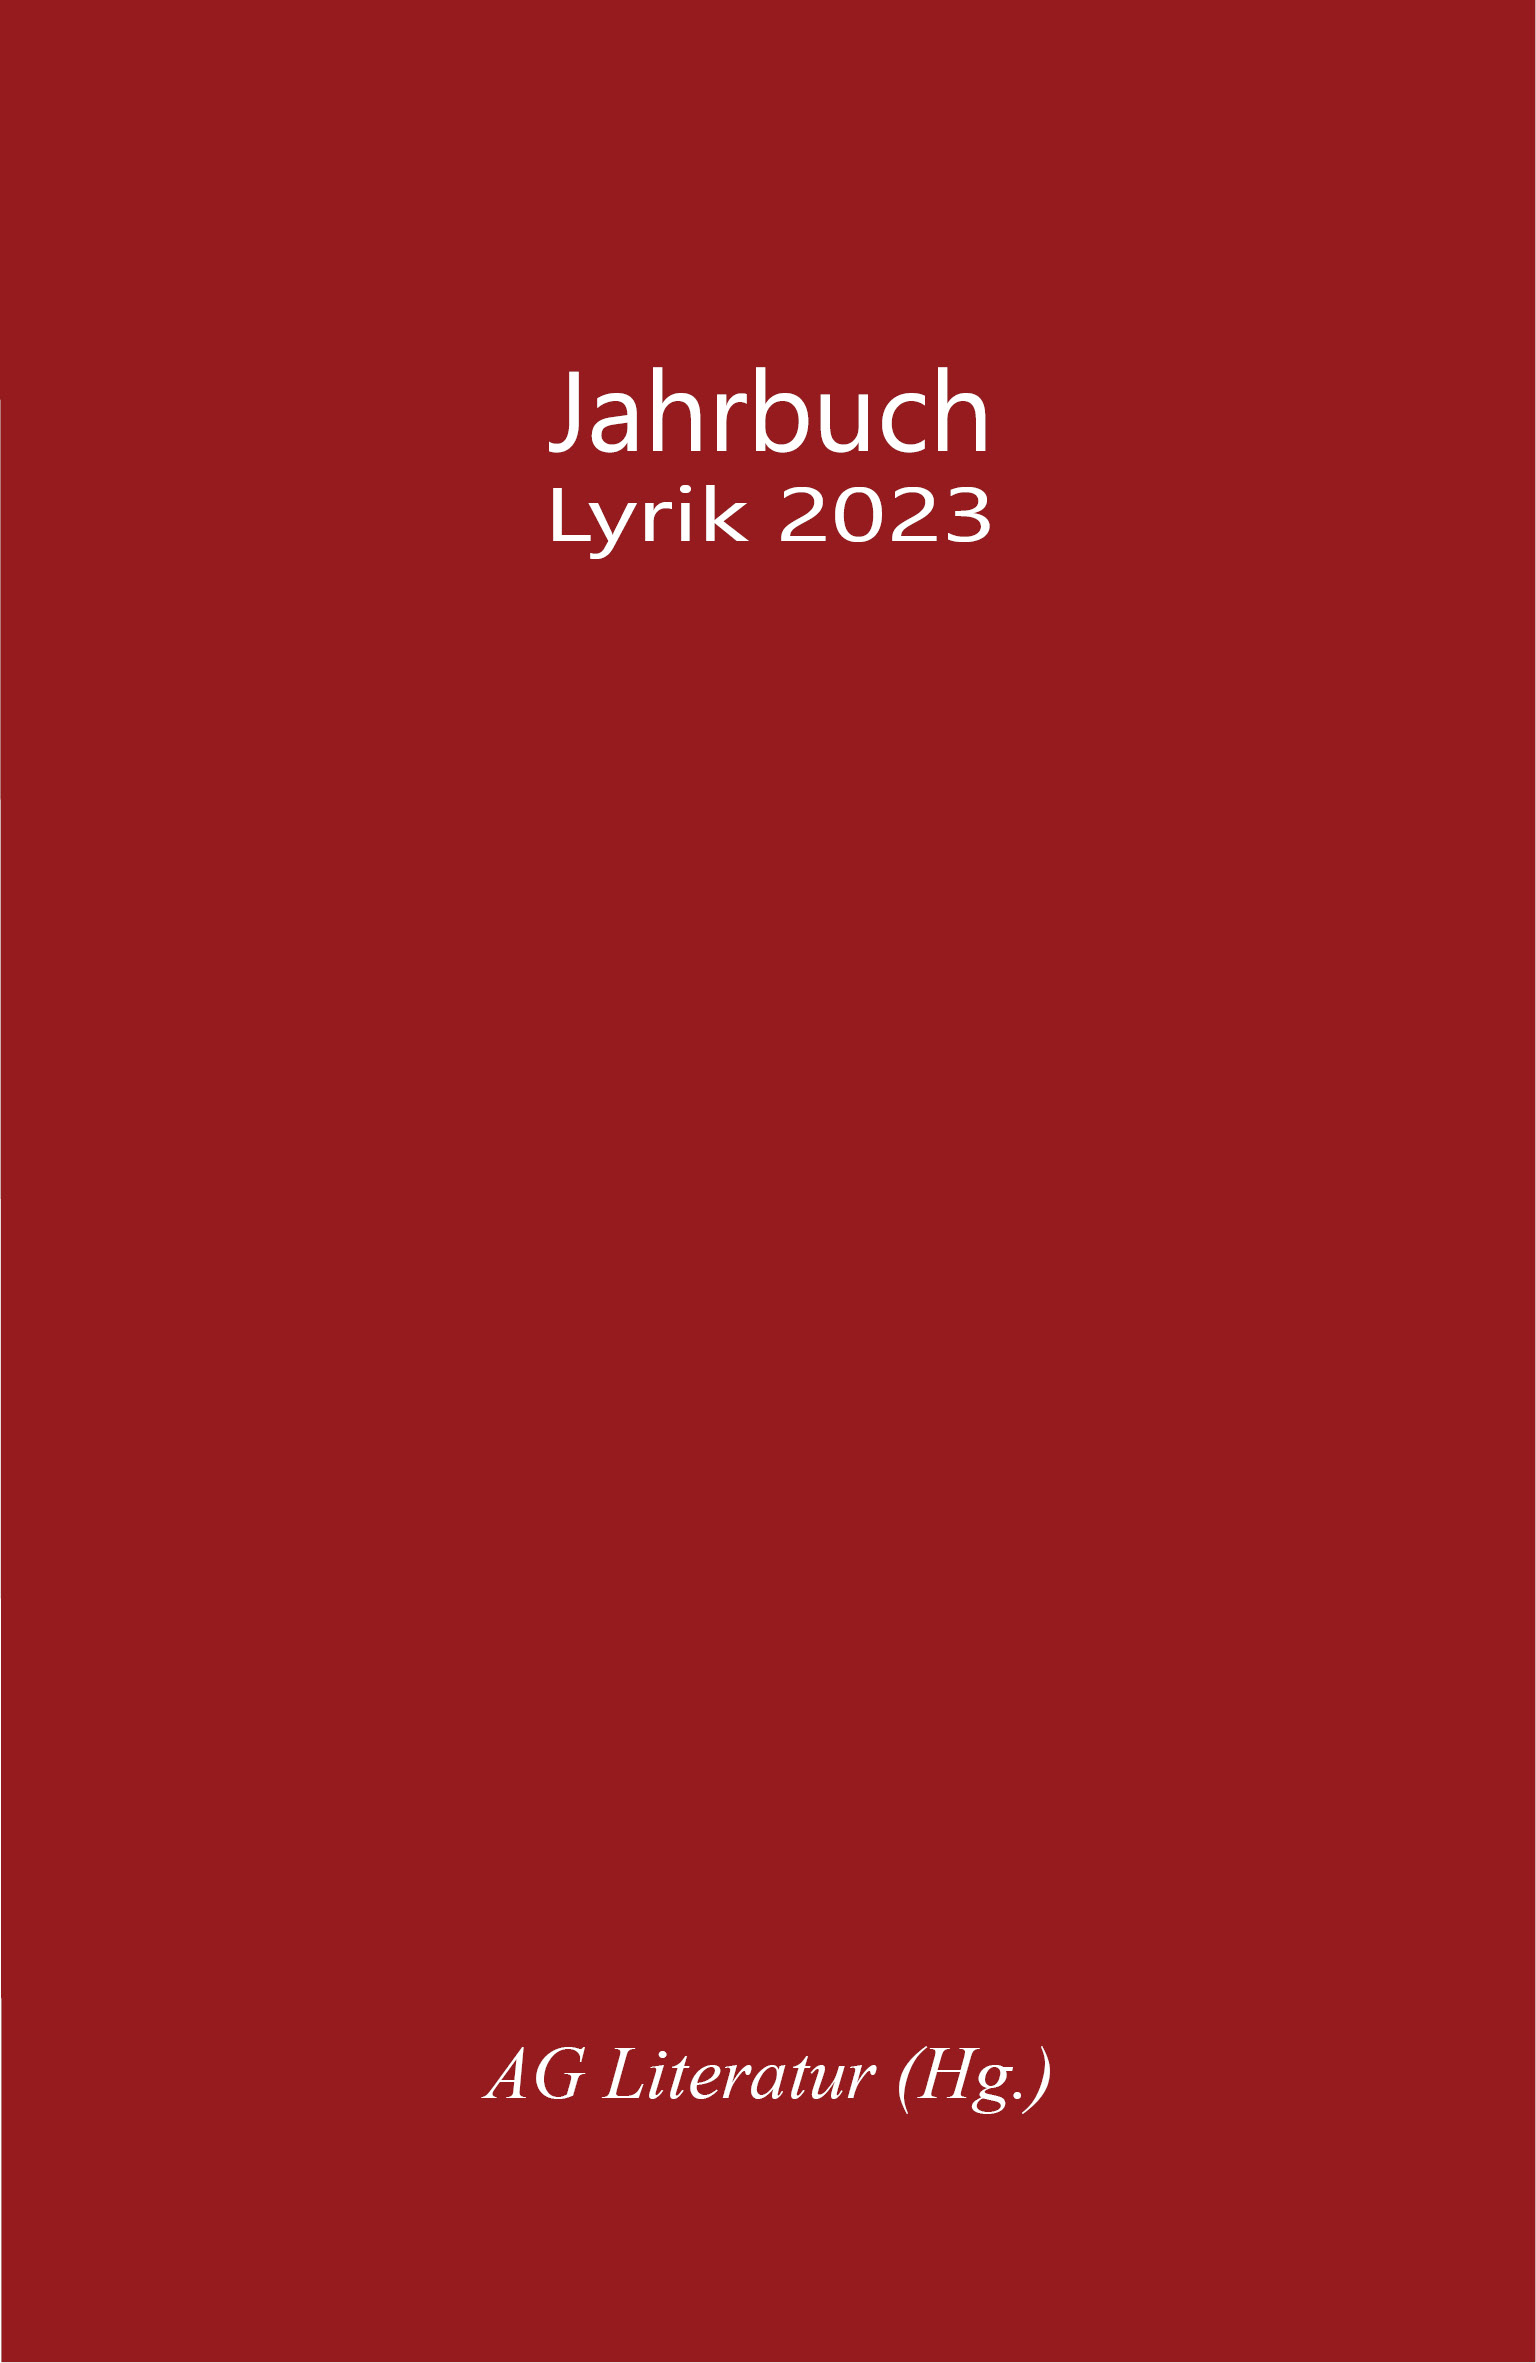 cover jahrbuch 2023